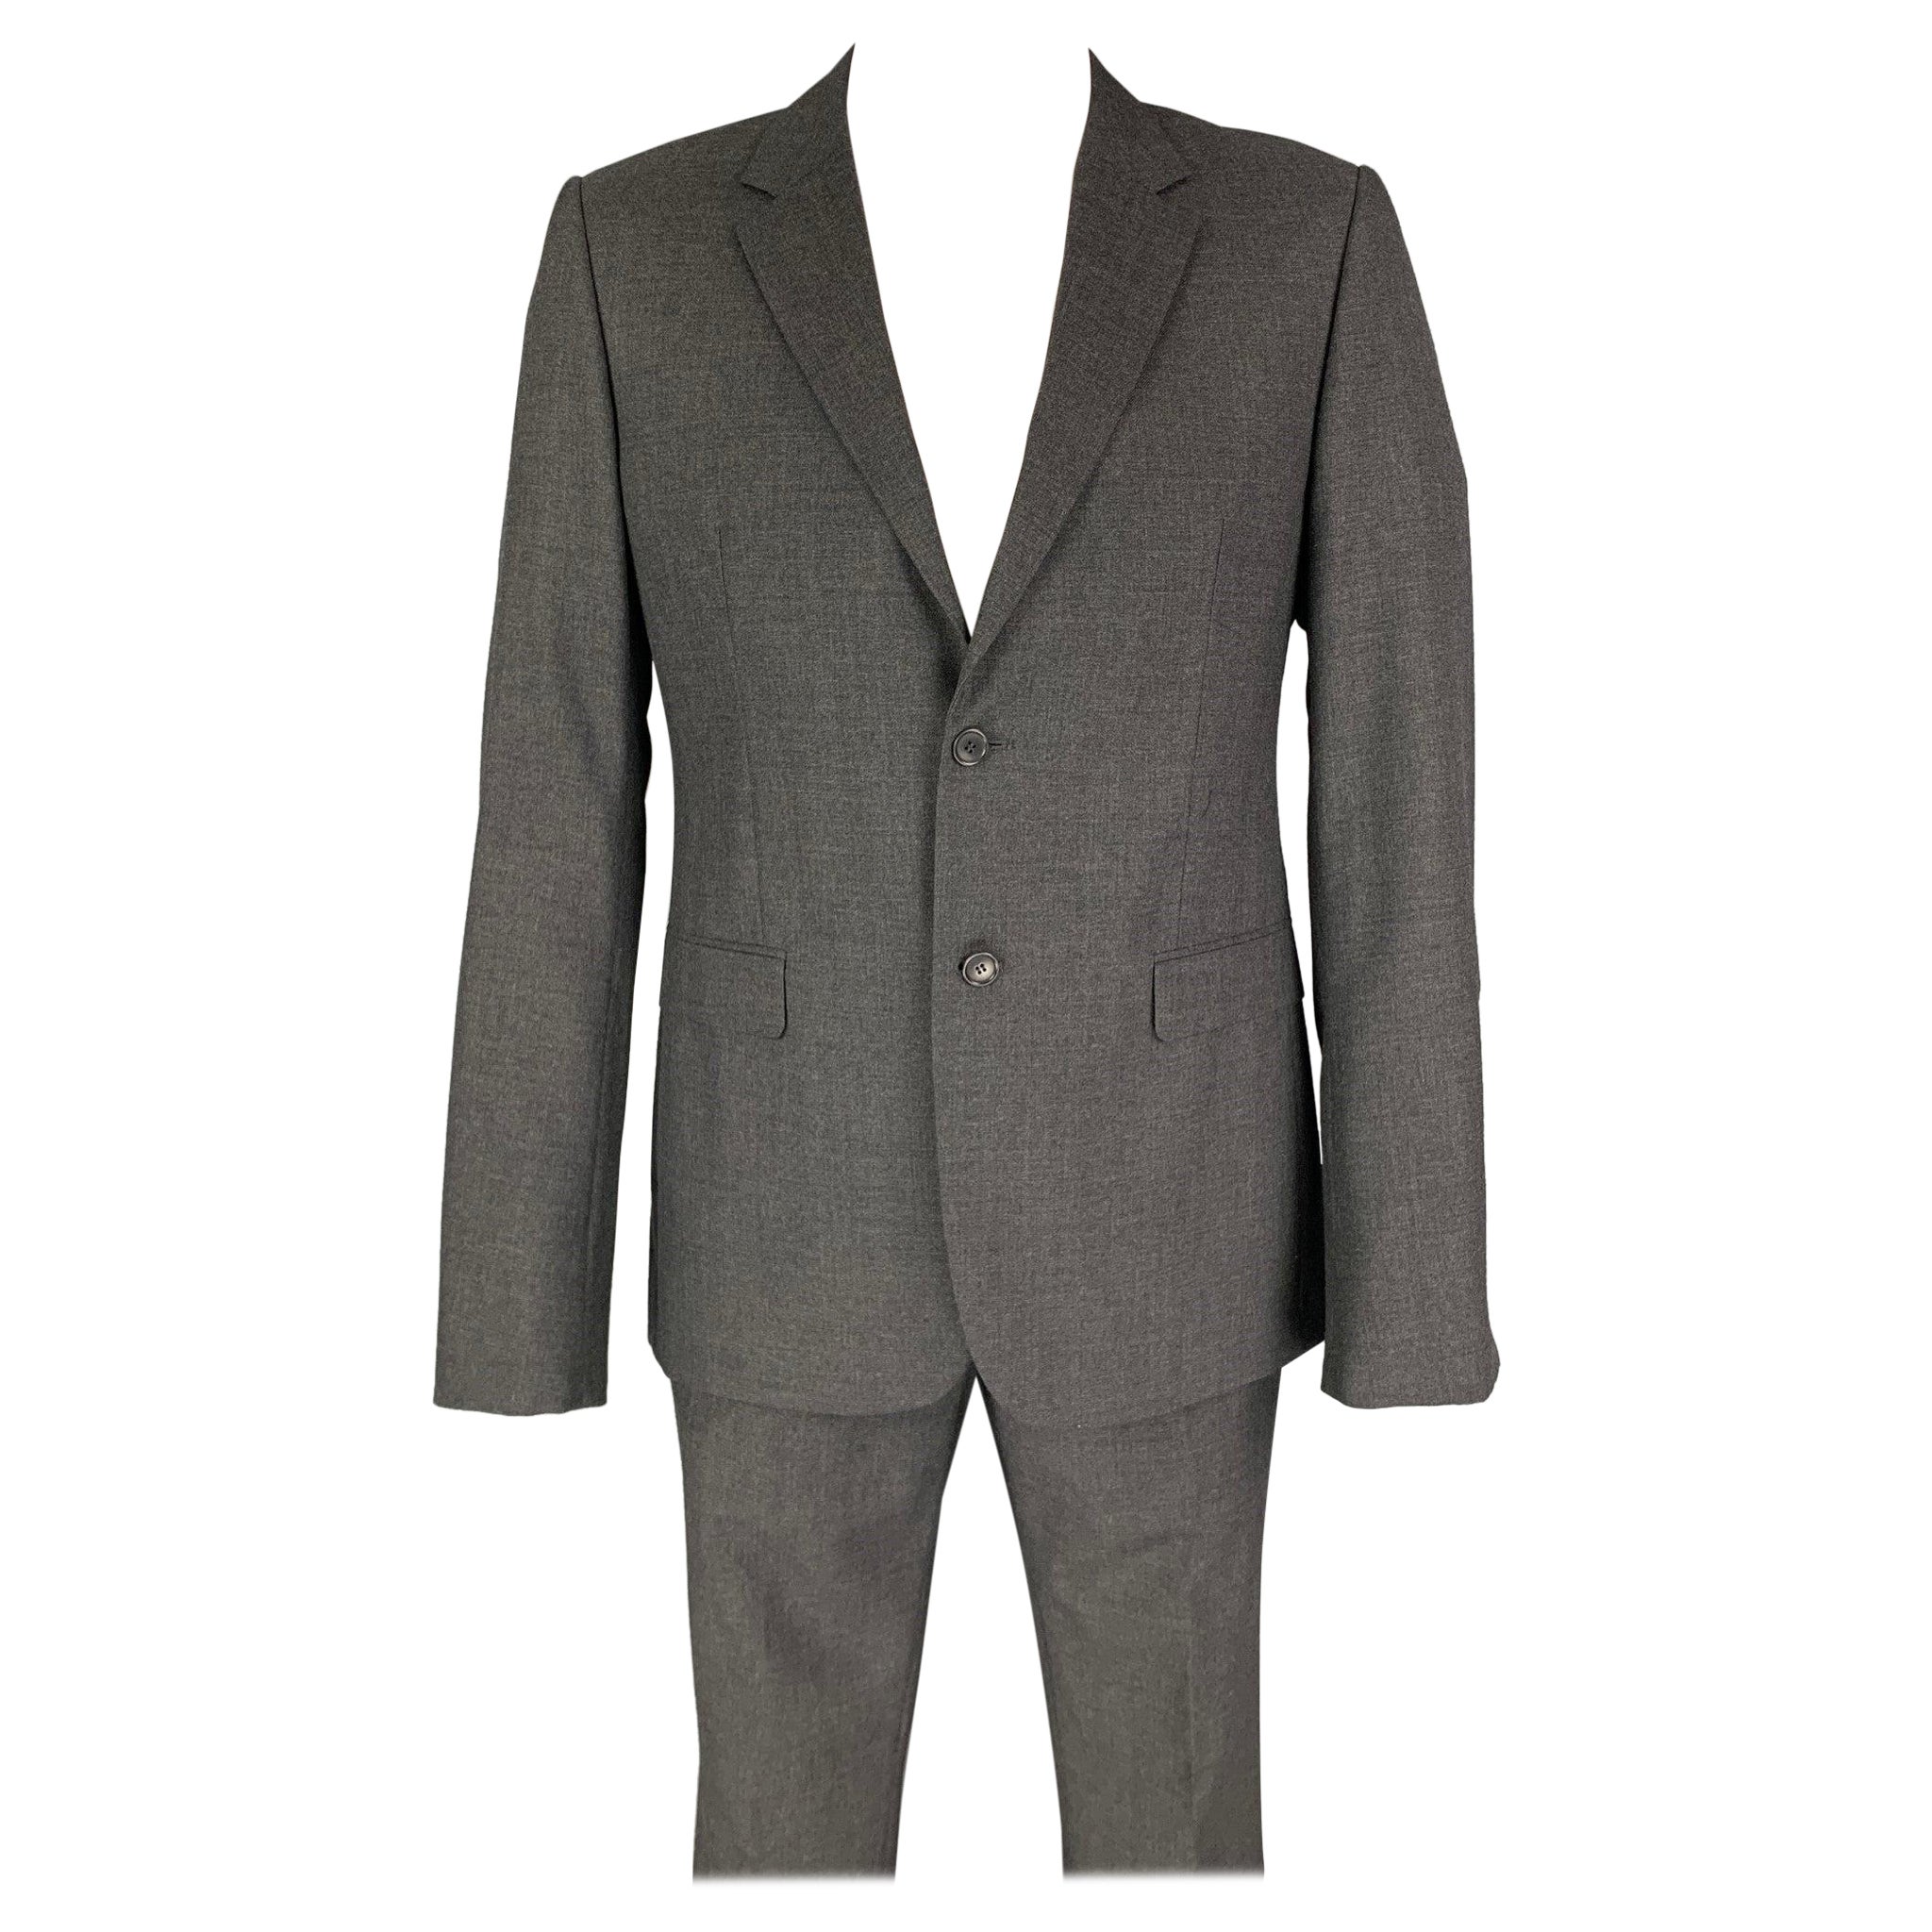 CALVIN KLEIN COLLECTION Size 42 Charcoal Wool Notch Lapel Suit For Sale